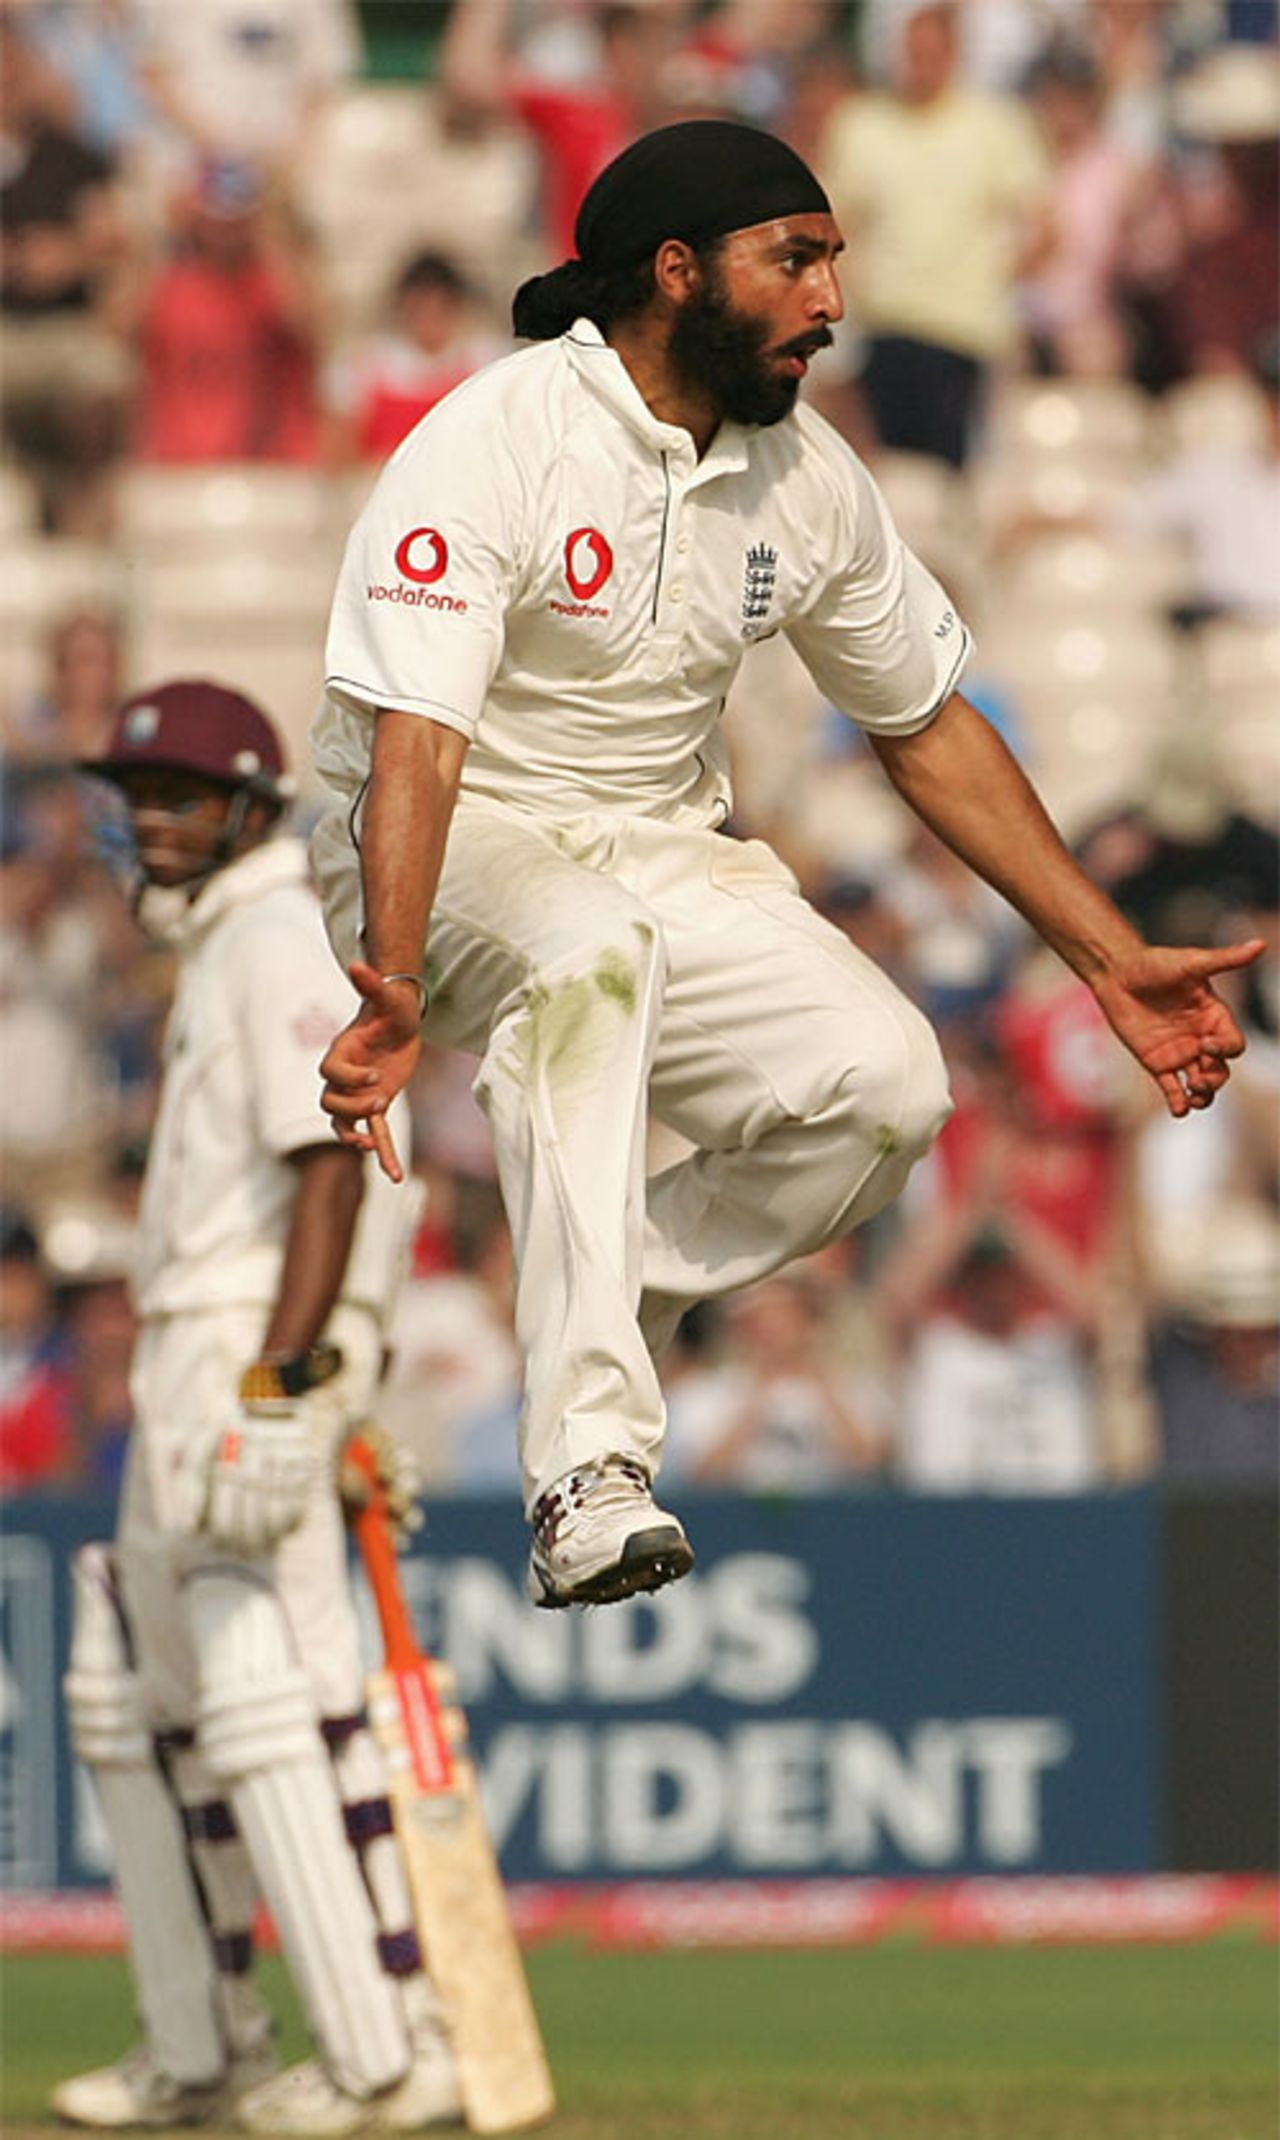 Monty Panesar in his traditional post-wicket celebratory jig after dismissing Dwayne Bravo, England v West Indies, 3rd Test, Old Trafford, June 10, 2007